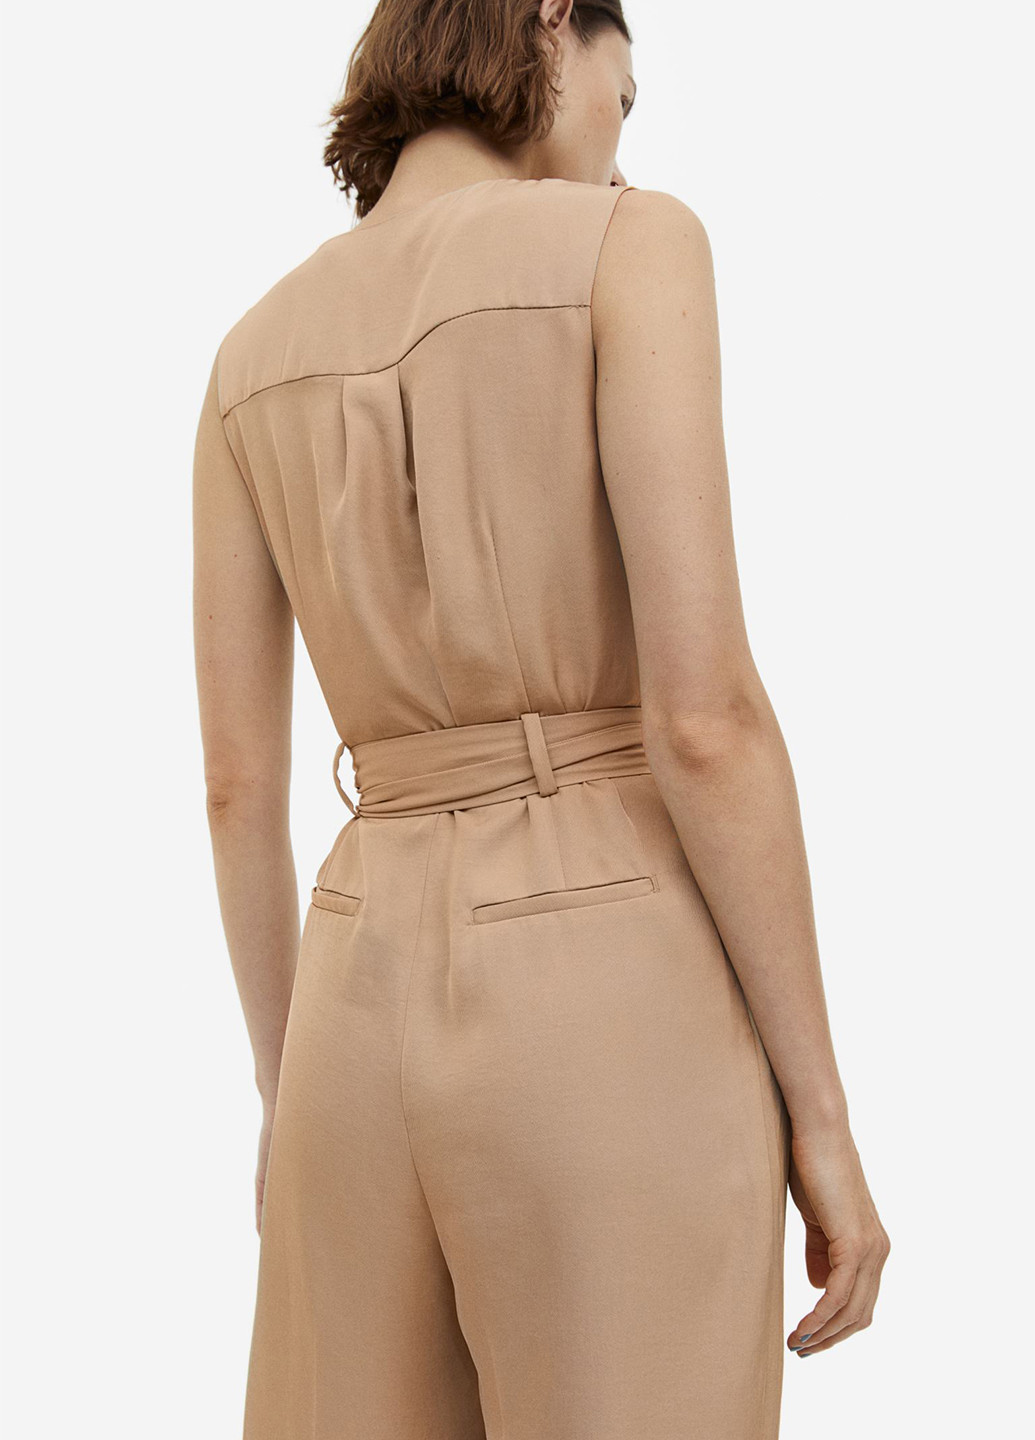 Комбинезон H&M комбинезон-брюки однотонный бежевый кэжуал полиэстер